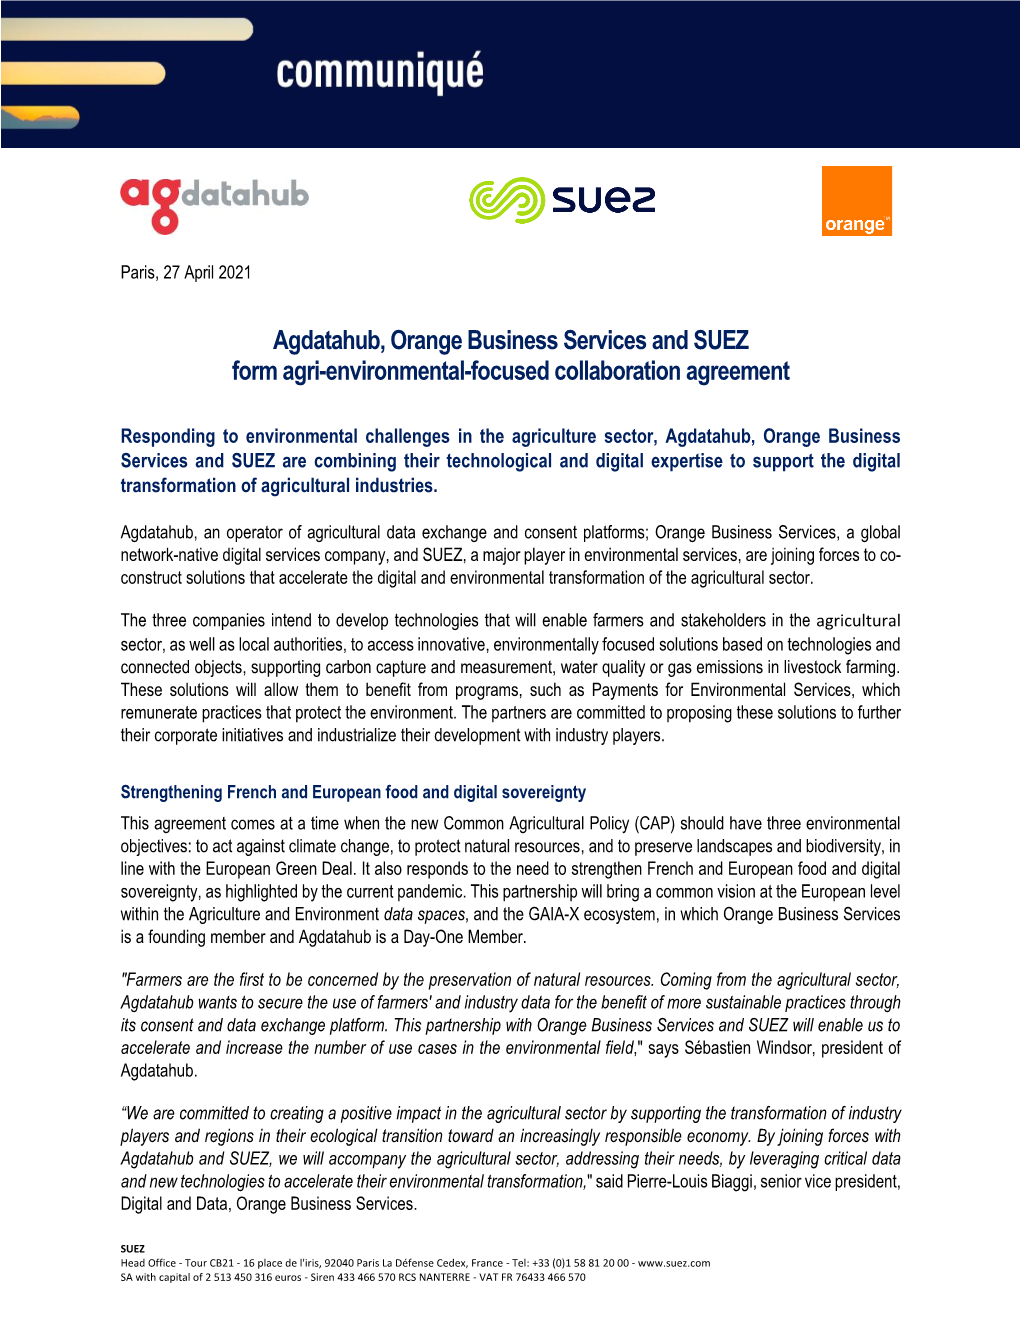 Agdatahub, Orange Business Services and SUEZ Form Agri-Environmental-Focused Collaboration Agreement